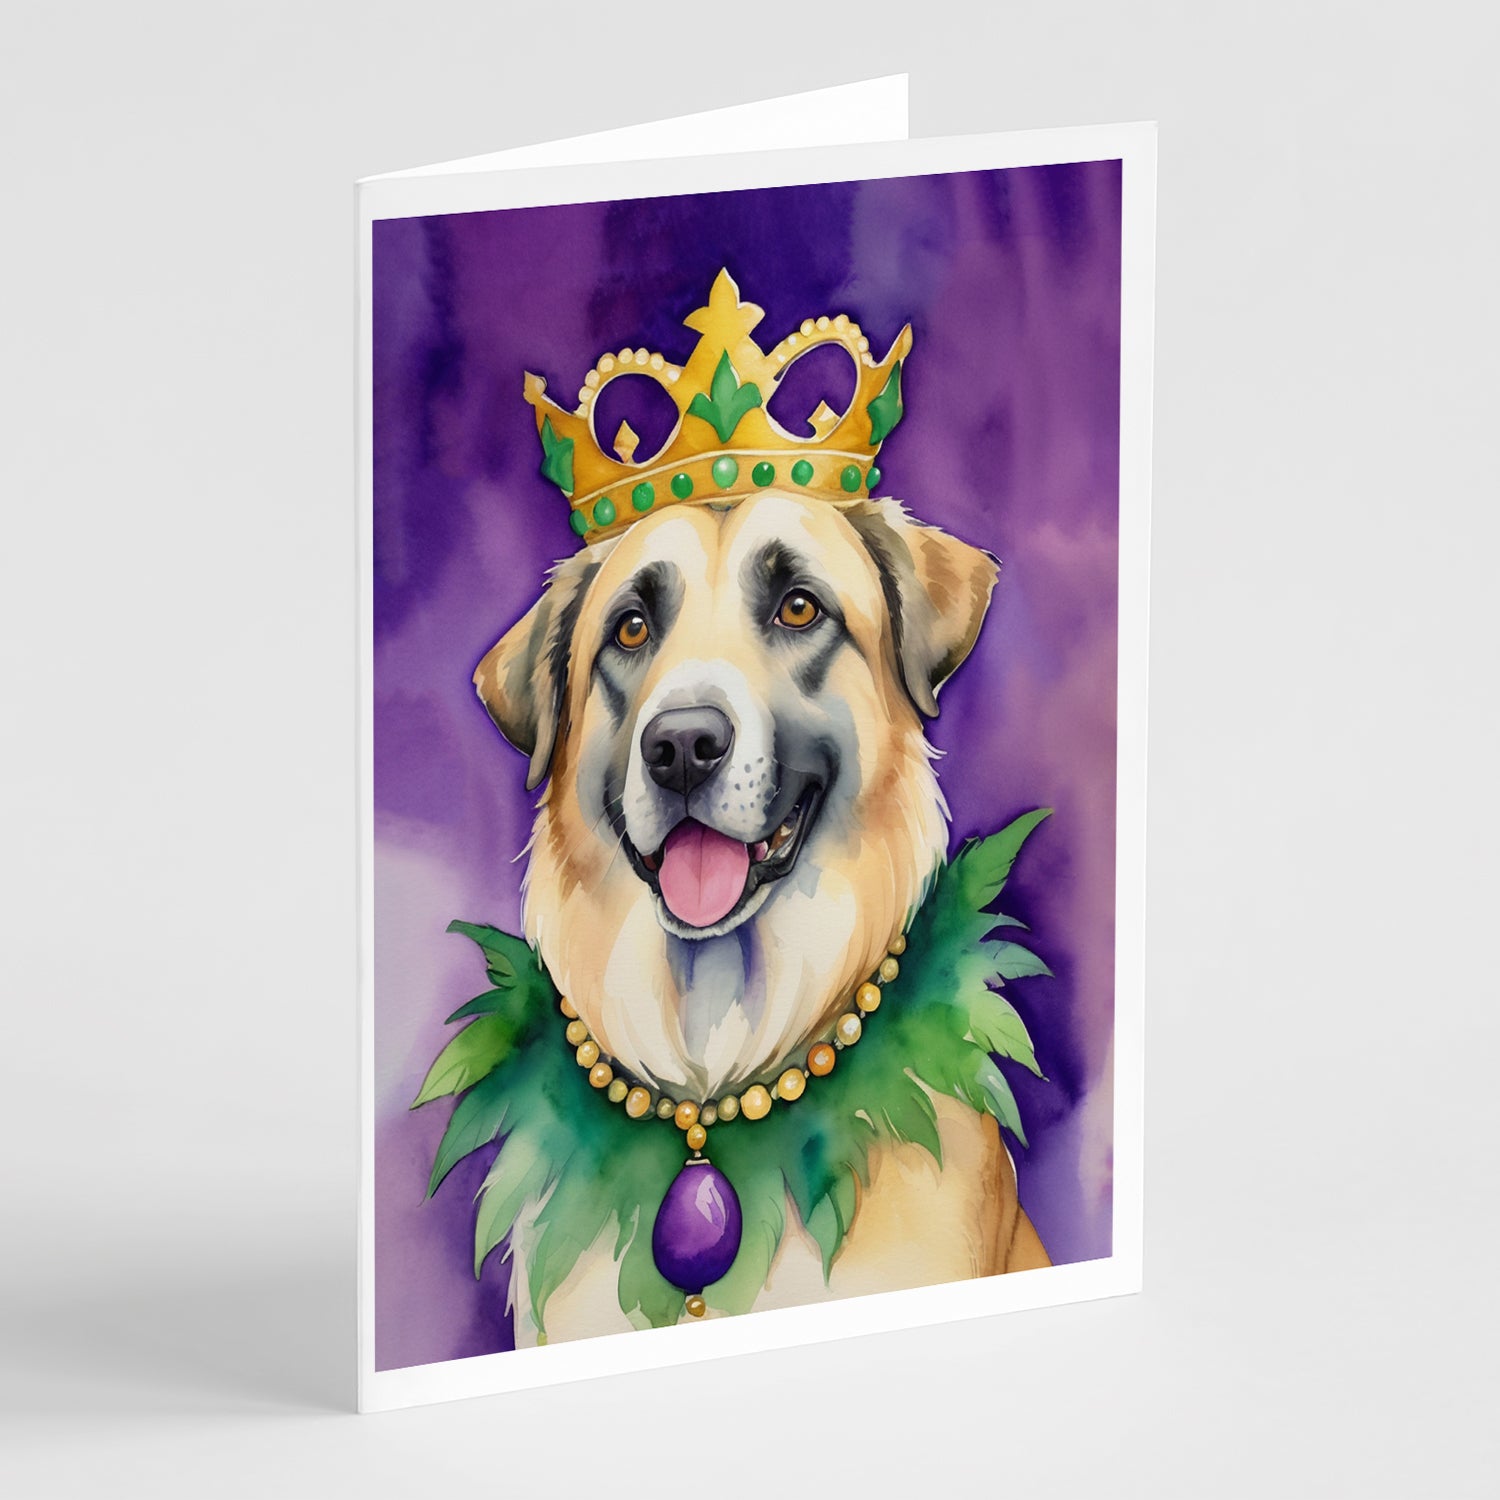 Buy this Anatolian Shepherd Dog King of Mardi Gras Greeting Cards Pack of 8